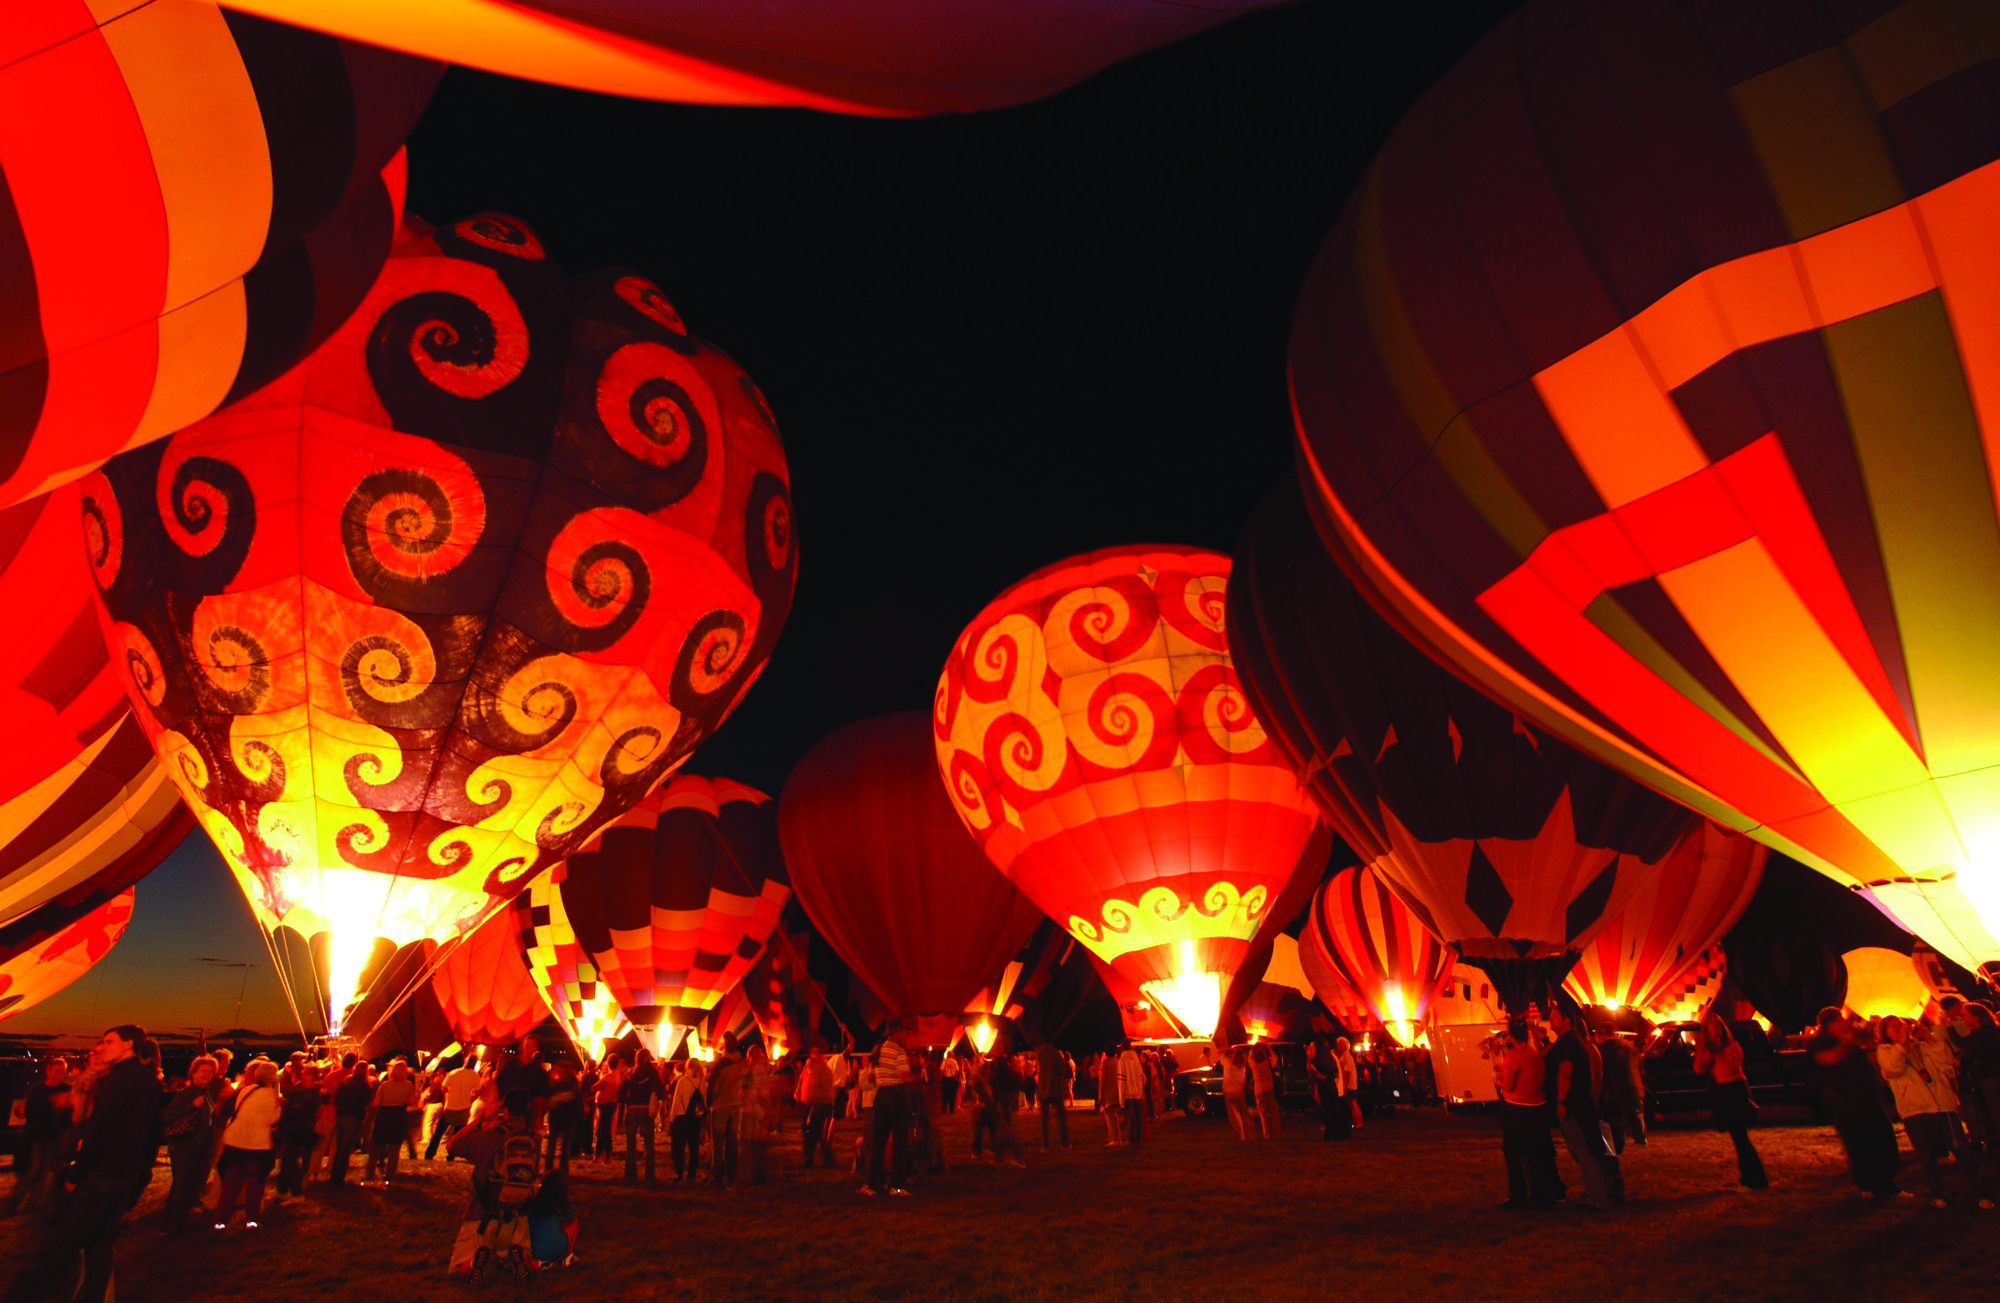 glowing hot air balloons